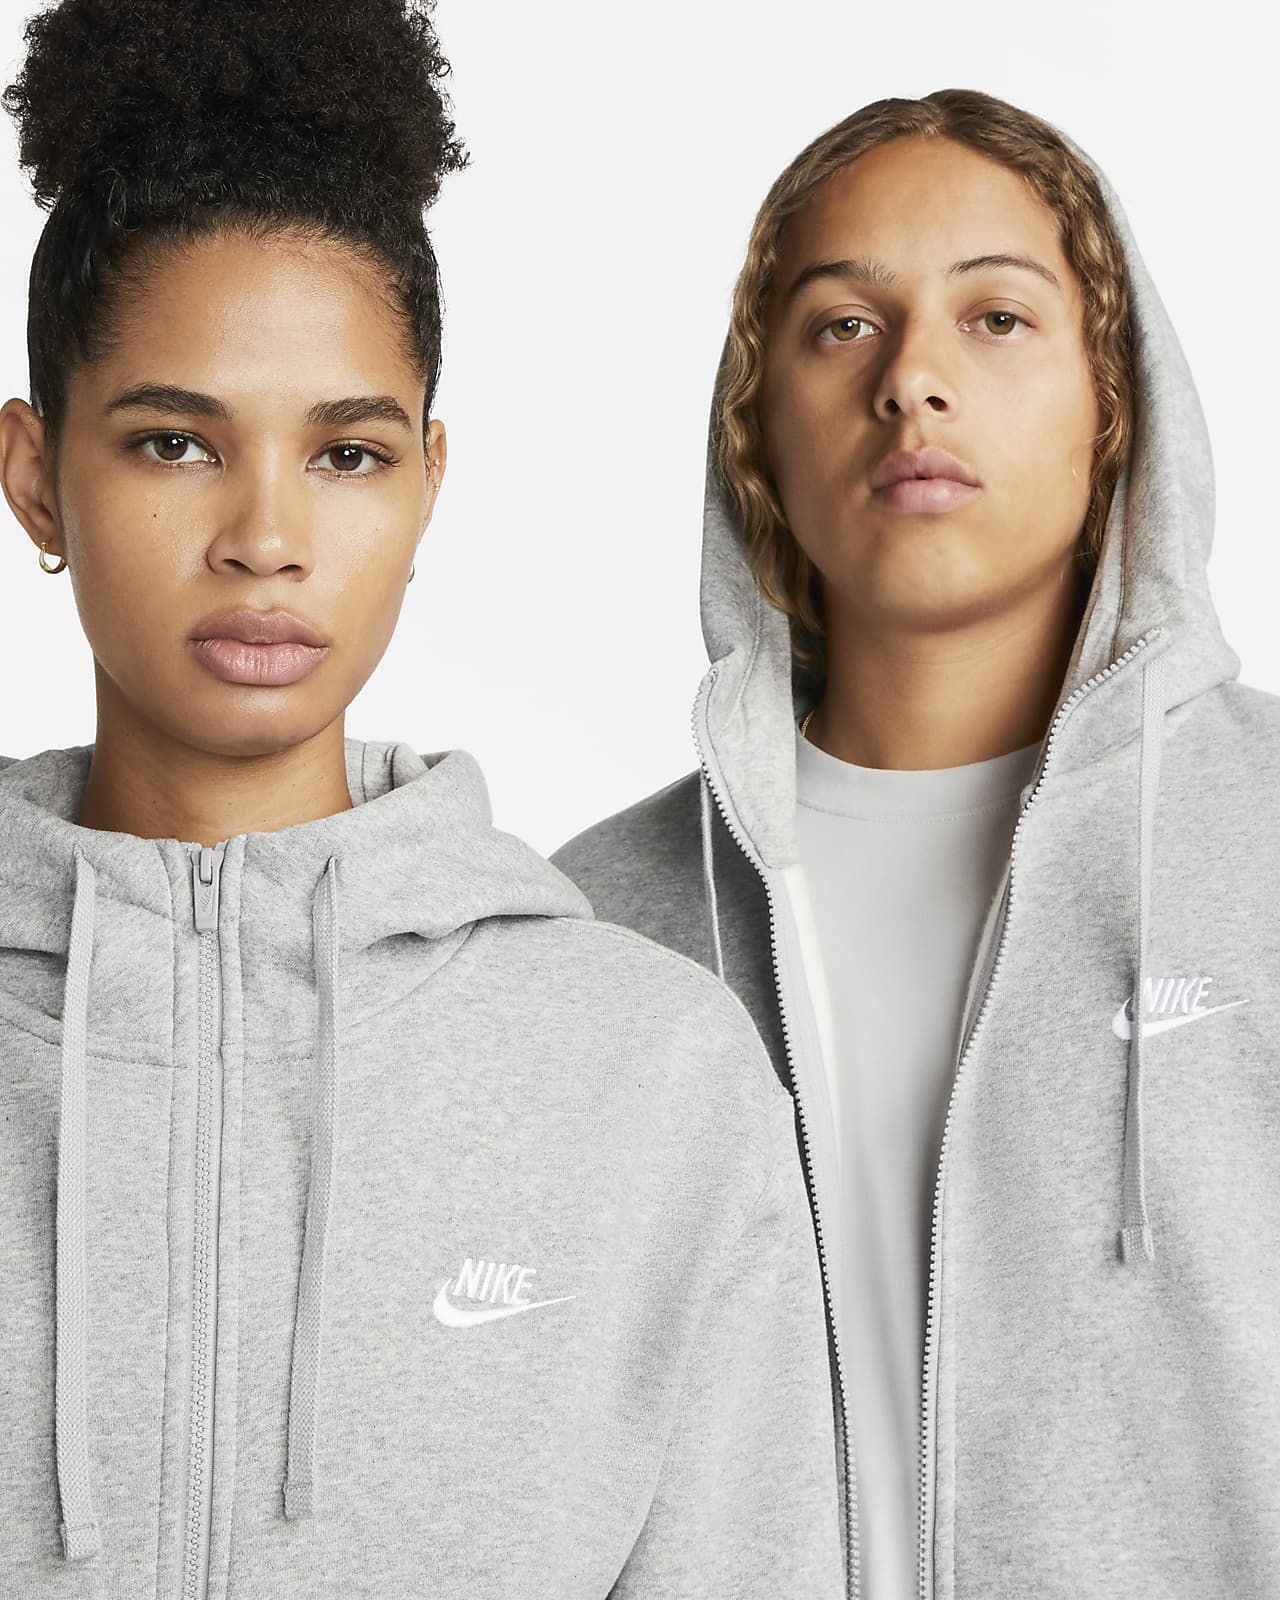 Sweat capuche Zippé Nike Sportswear Fleece pour Homme - BV2645-100